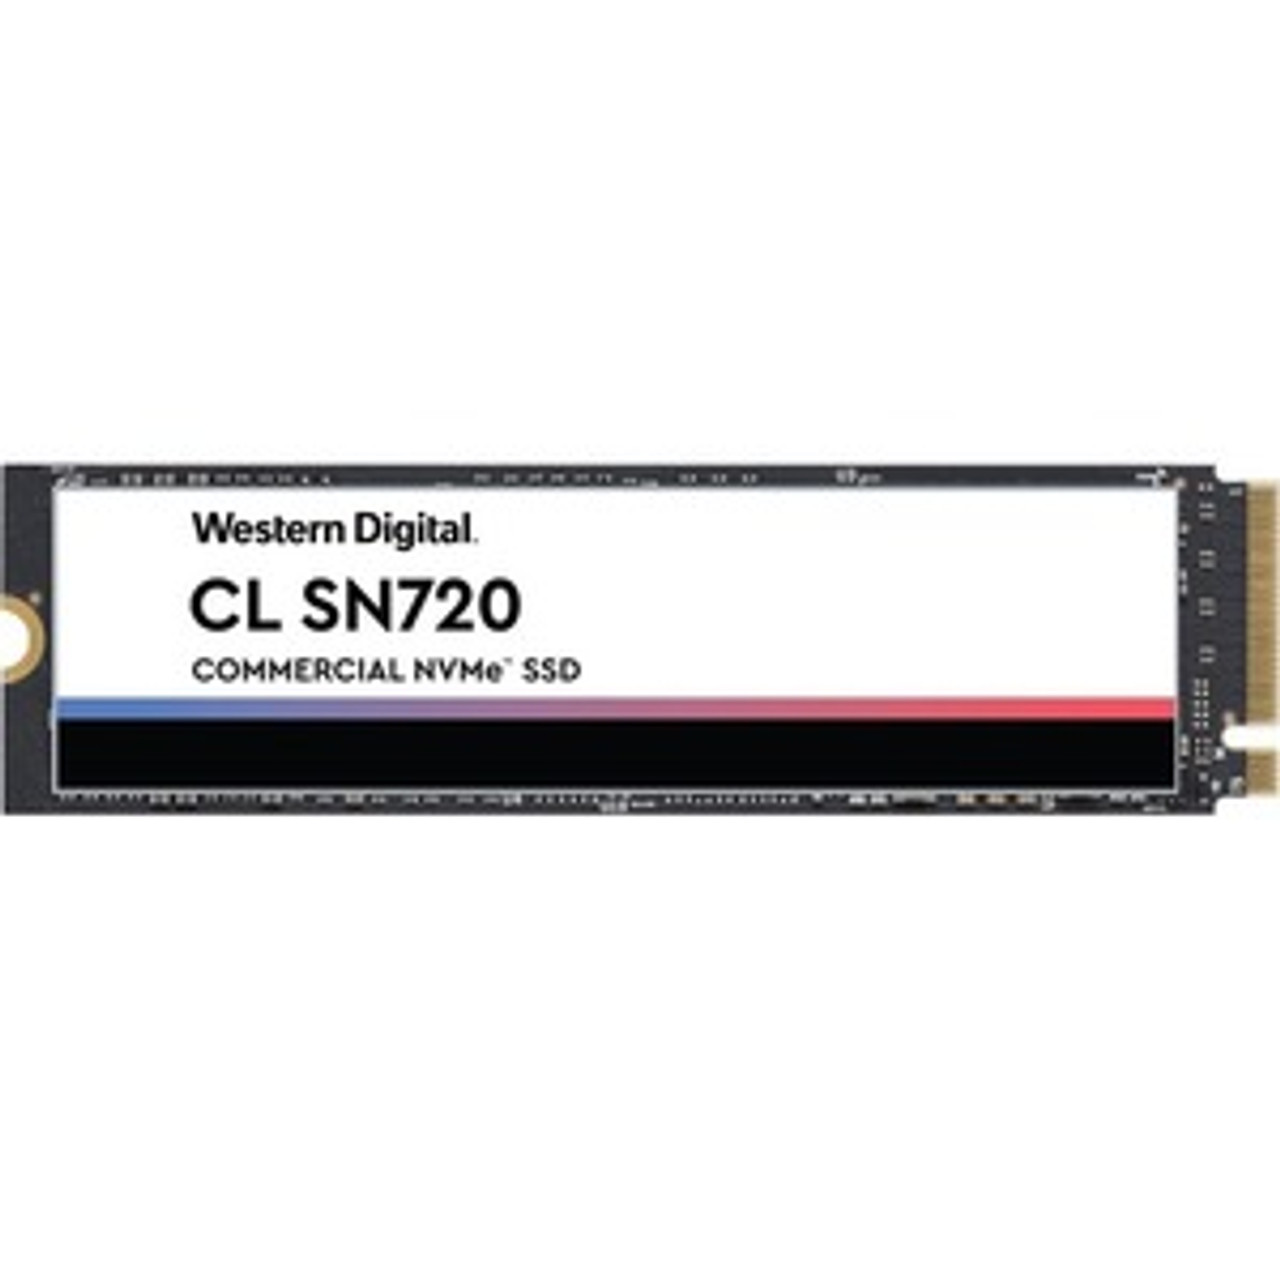 SDAQNTW-512G-2000 Western Digital CL SN720 512GB TLC PCI Express 3.0 x4 NVMe (SED TCG Opal) M.2 2280 Internal Solid State Drive (SSD)